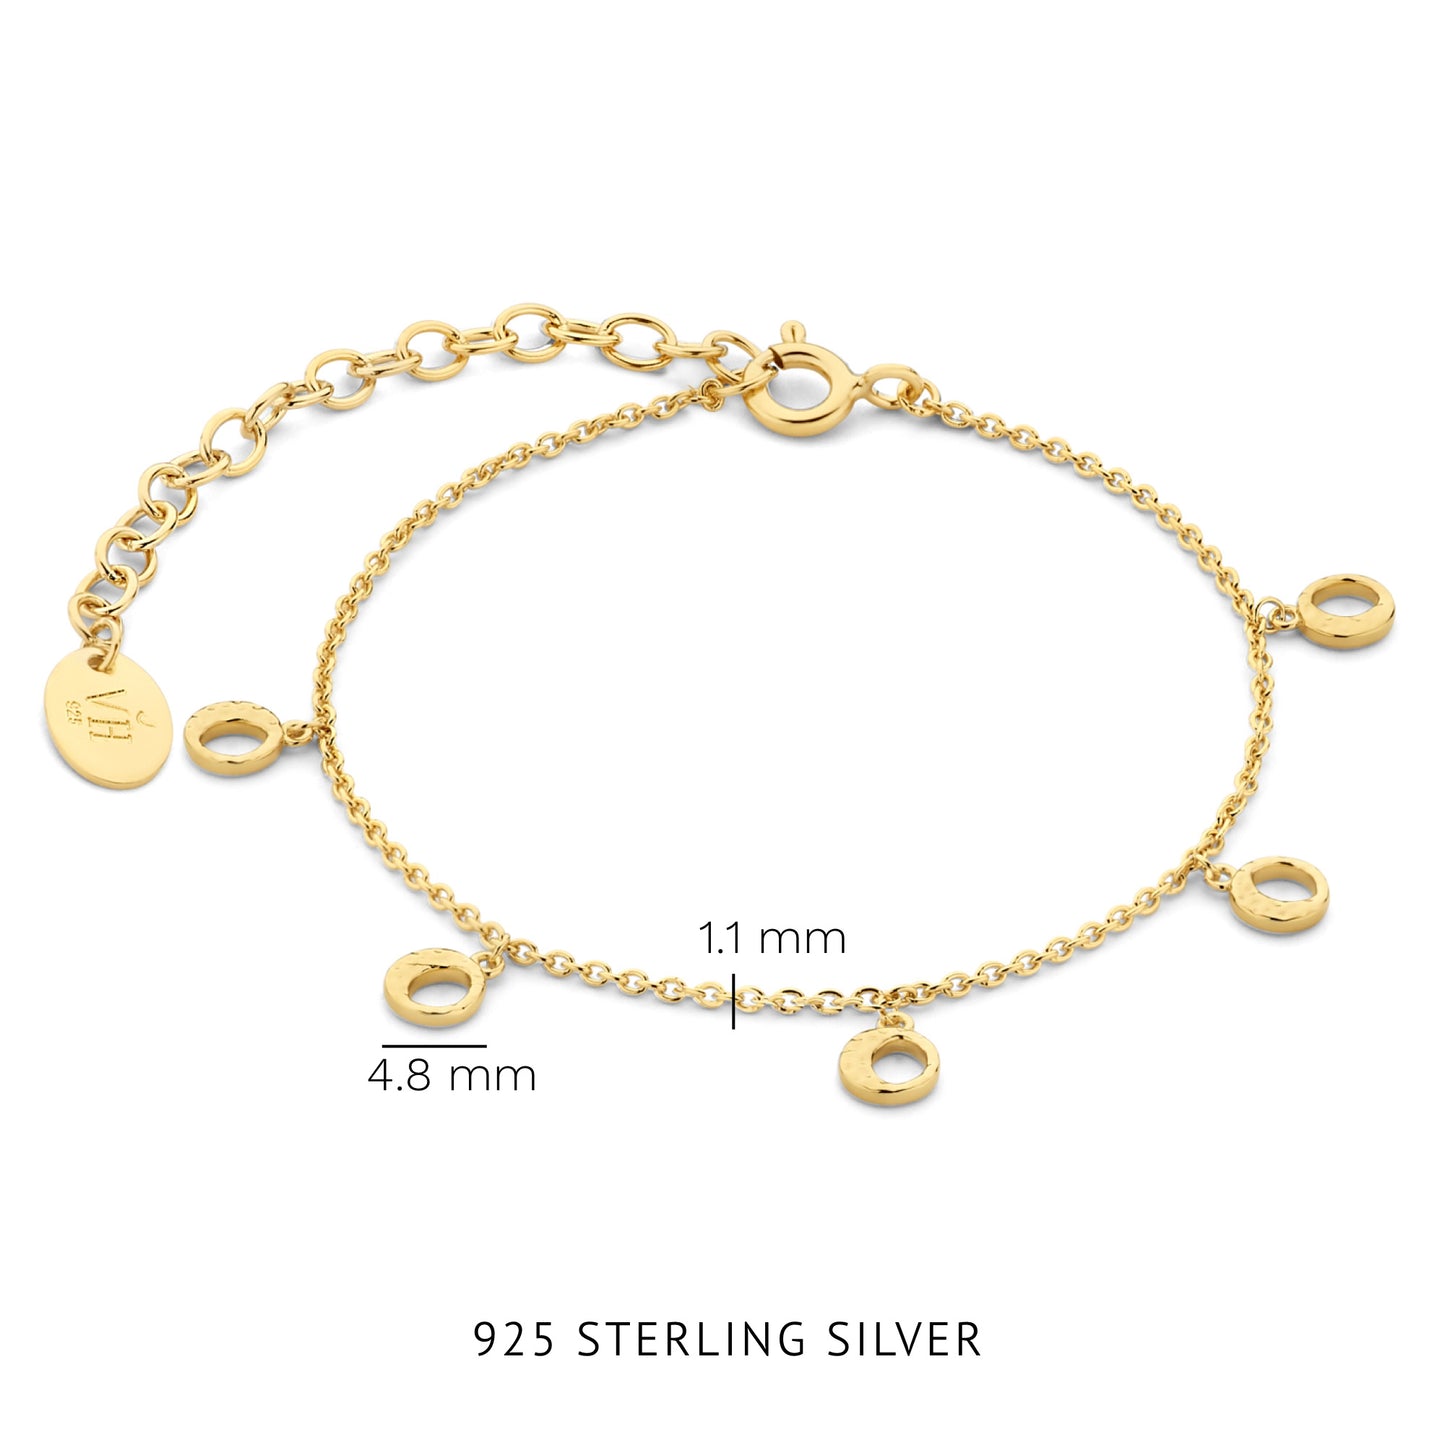 Violet's Gift 925 sterling silver gold plated necklace and bracelet gift set